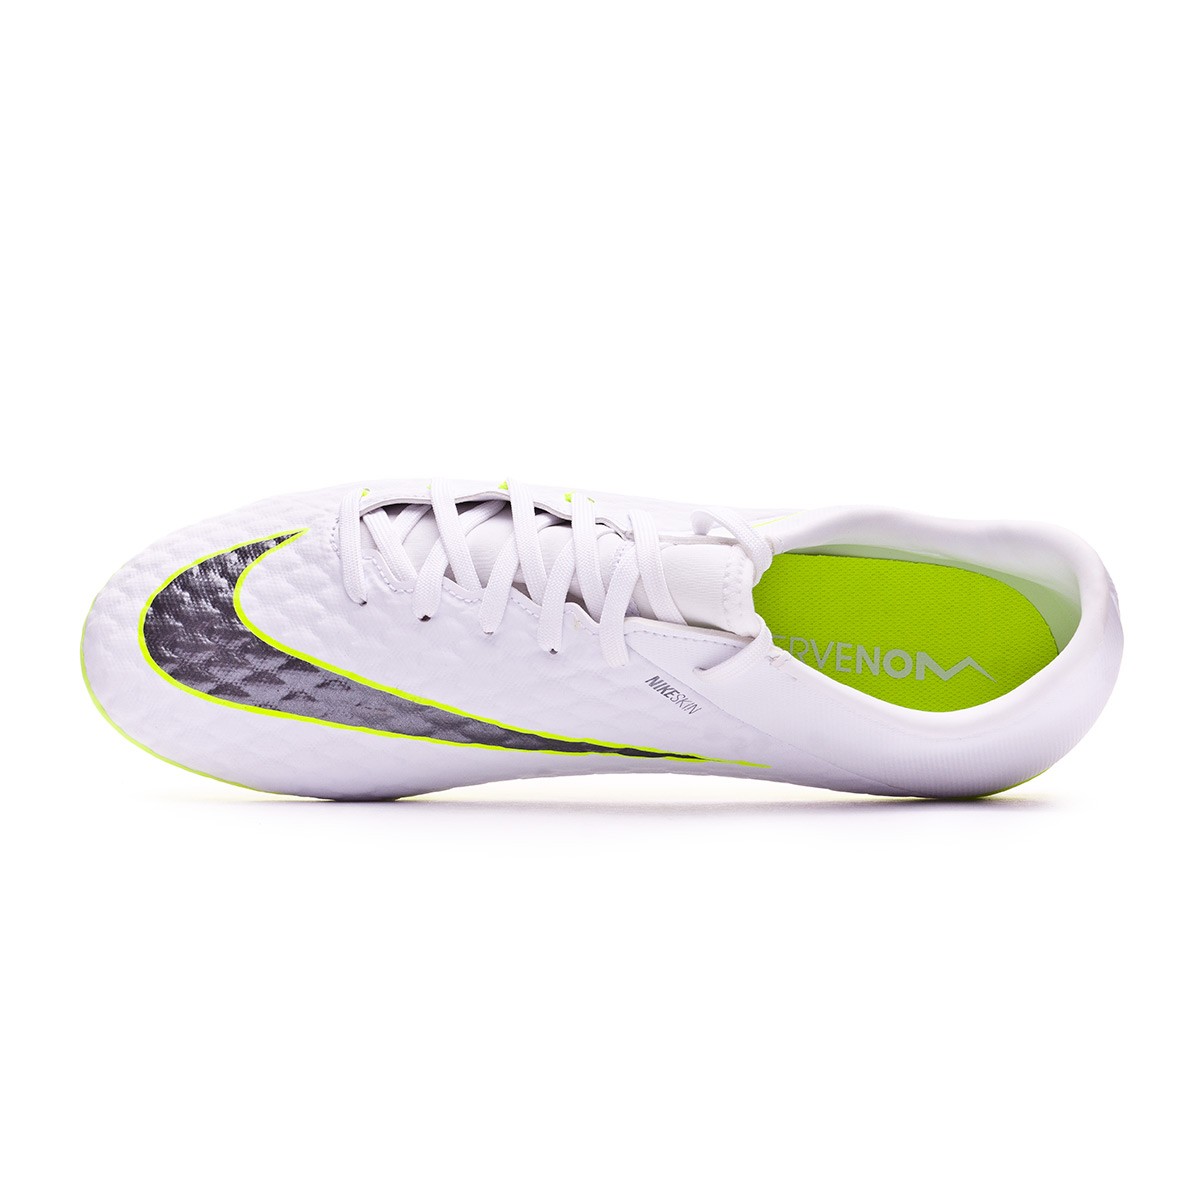 Nike Indoor Football Shoes 2015 HypervenomX Finale black